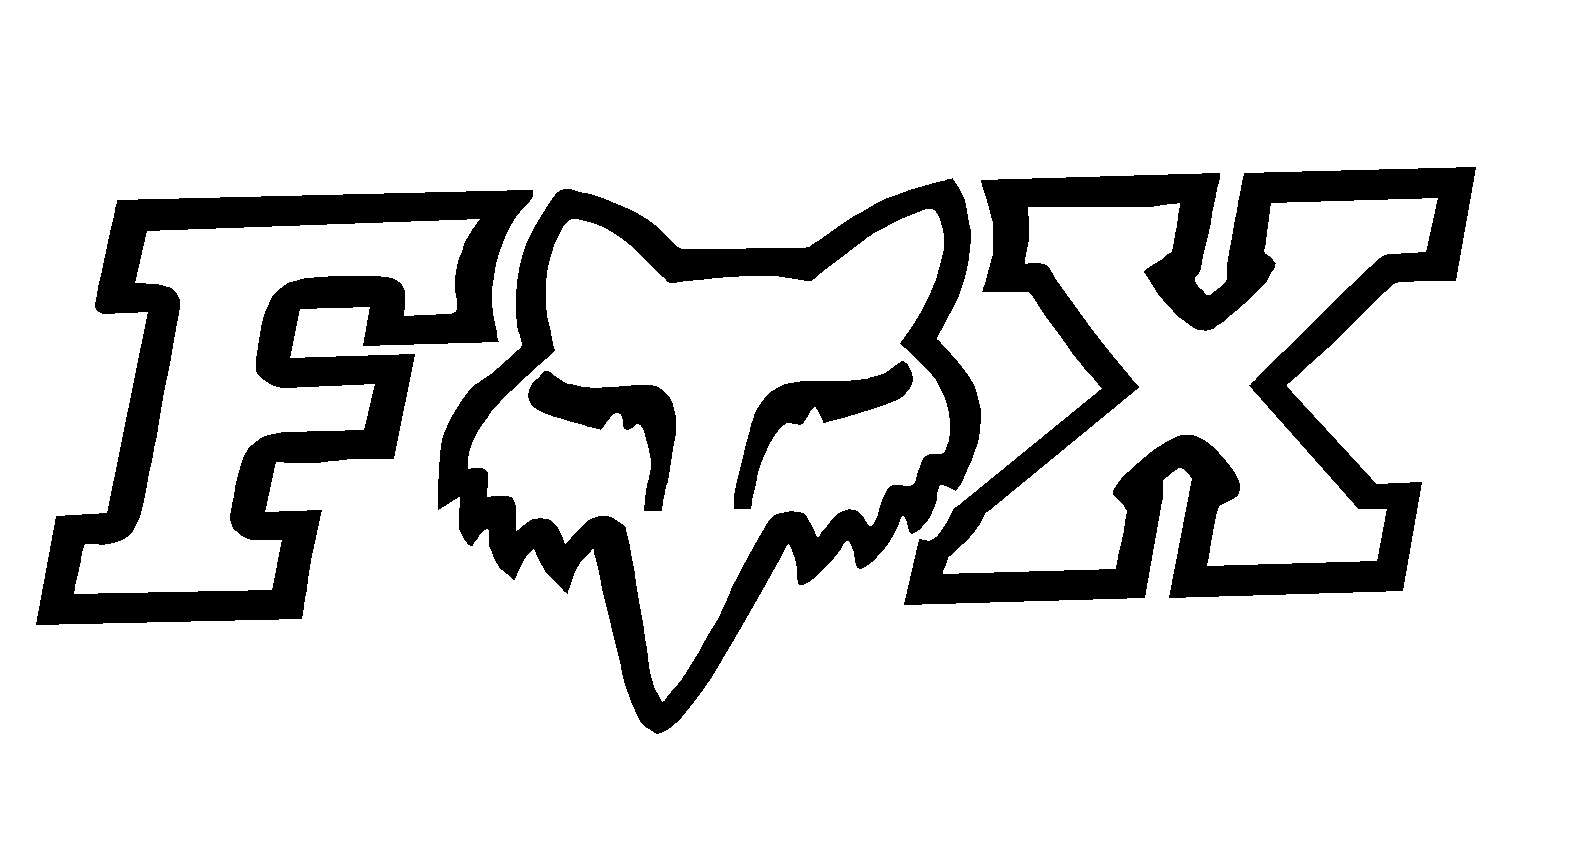 Фирма fox. Fox фирма. Fox логотип. Трафарет велосипеда. Наклейка фирмы Fox.